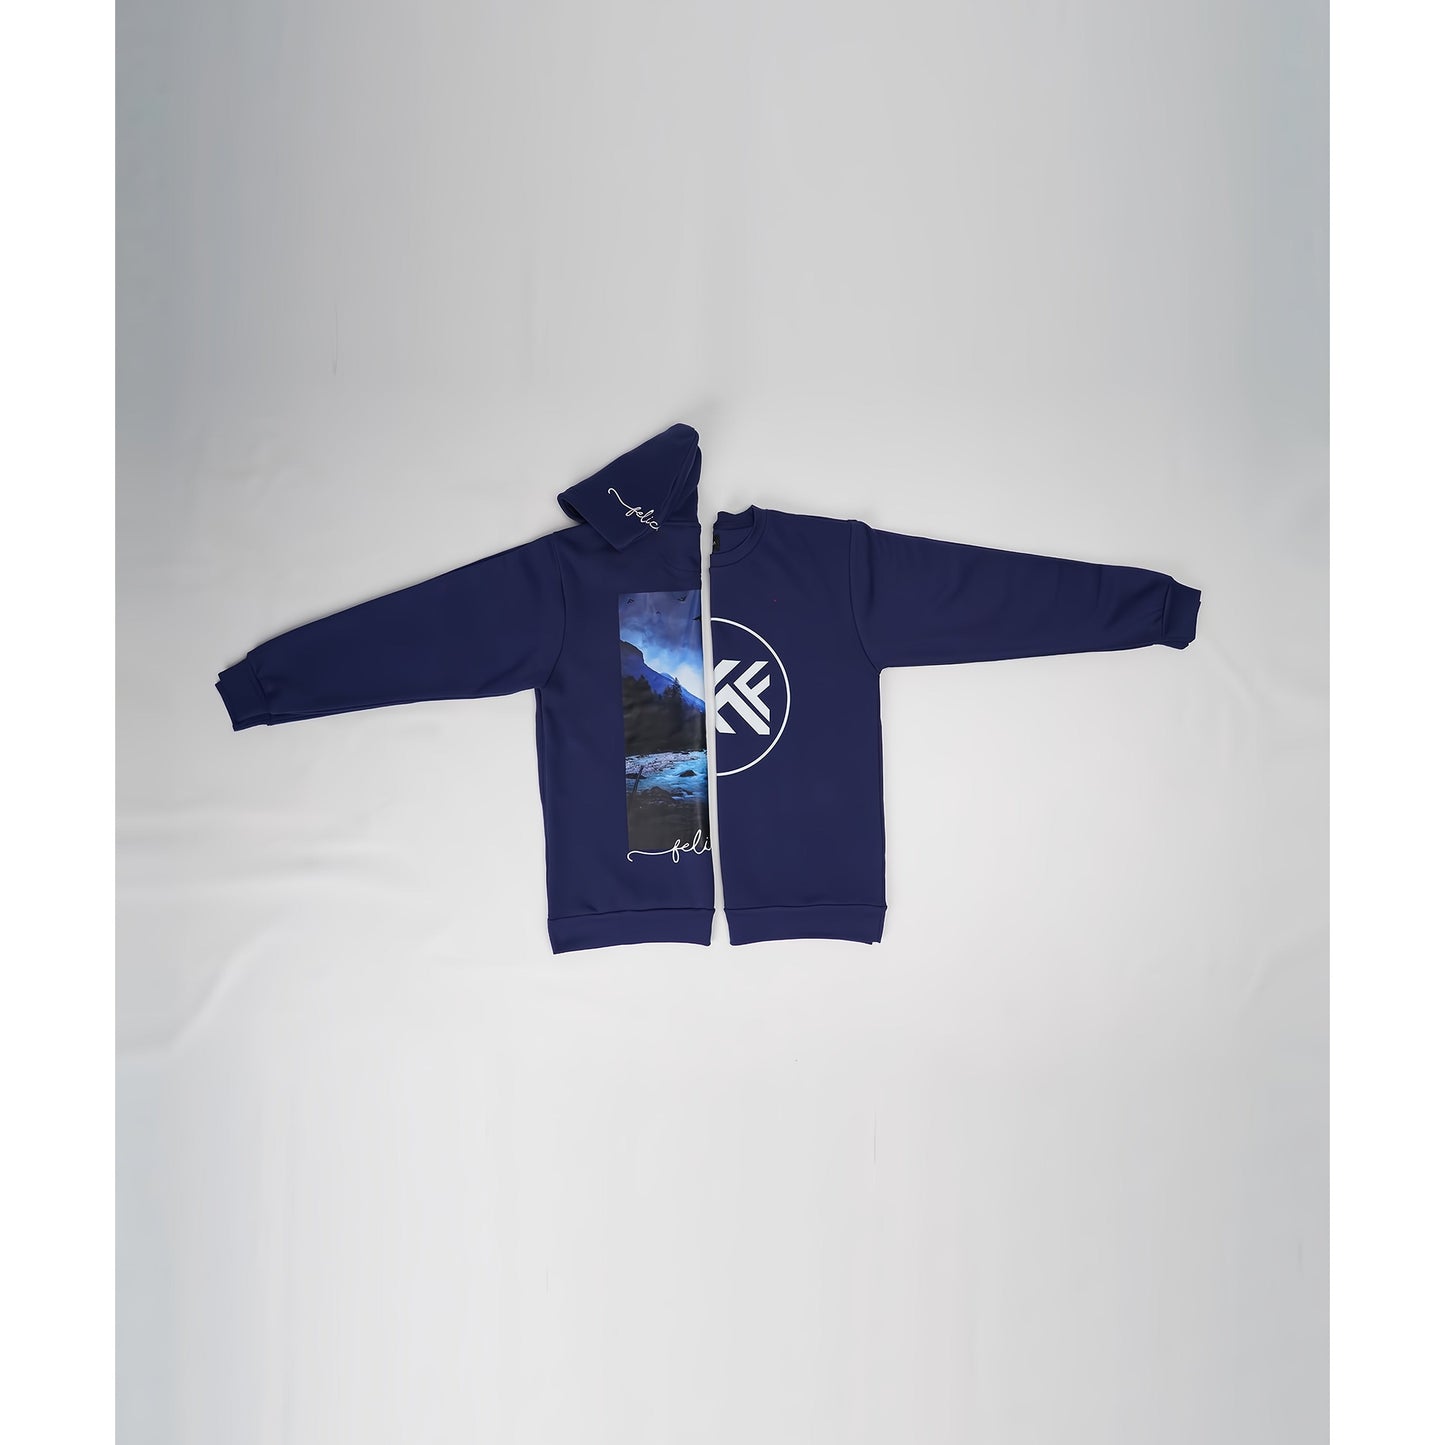 Felicia Blue Navy SweatShirt 4